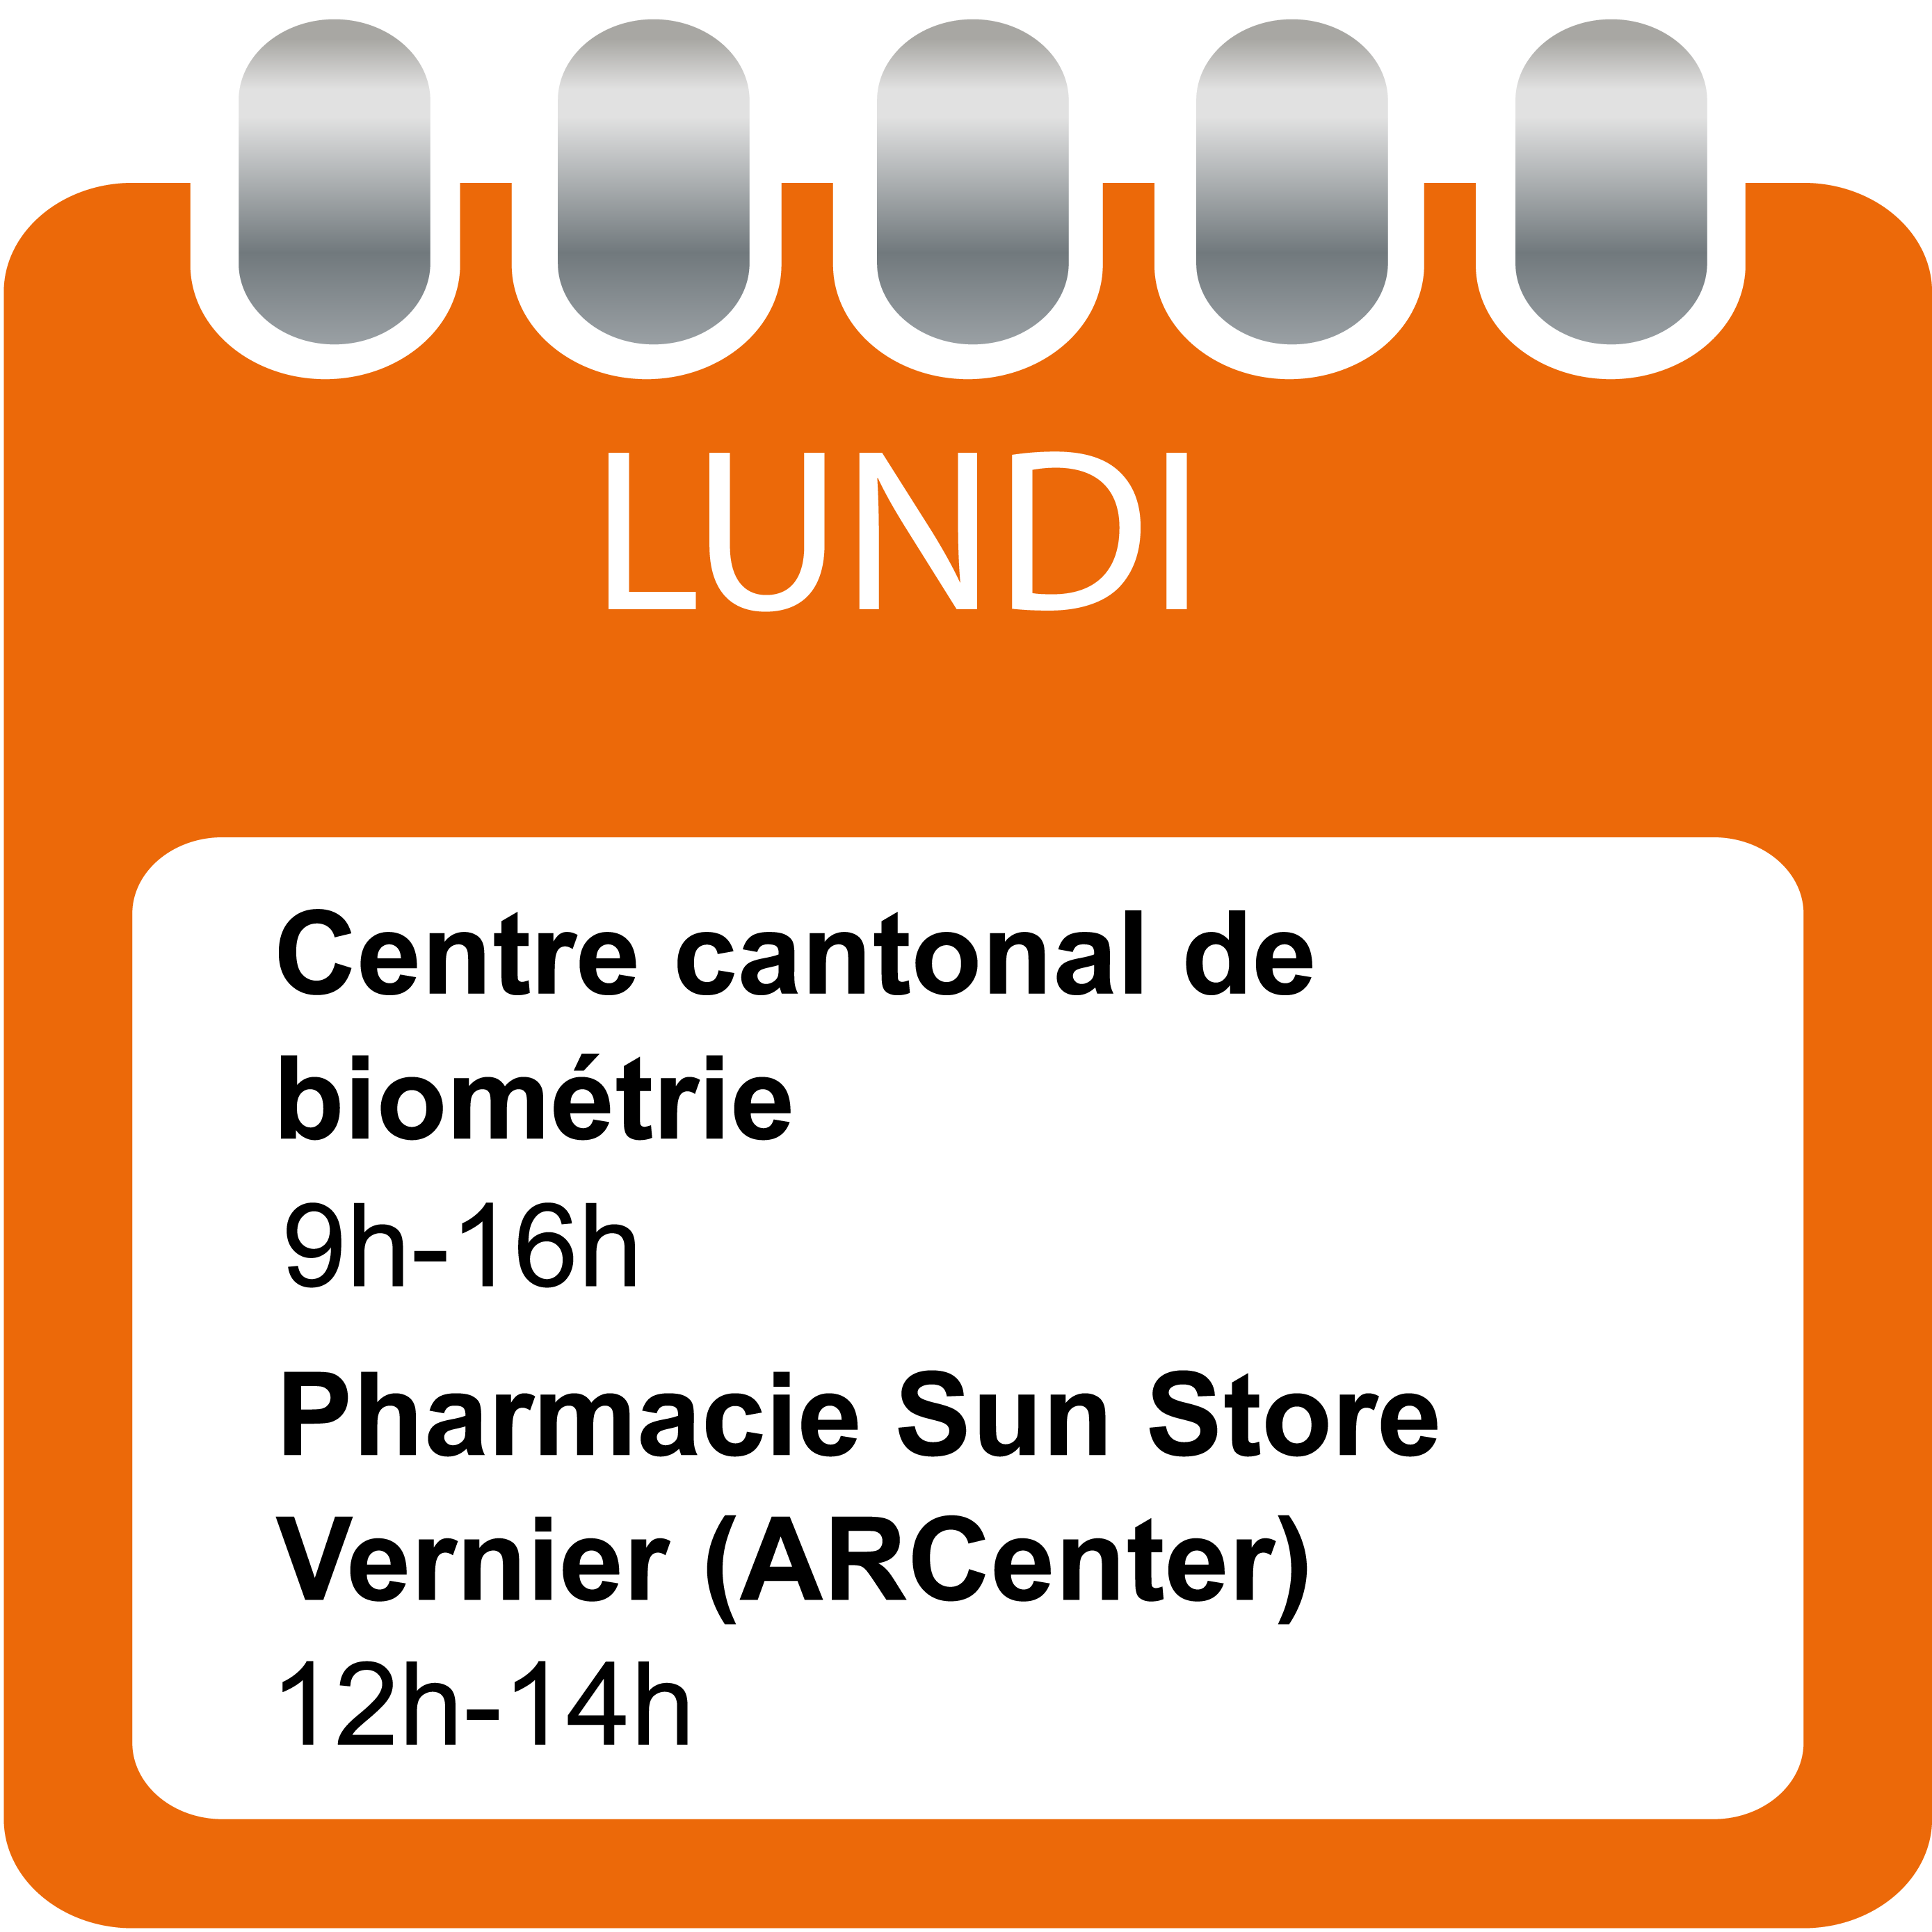 Lundi - Centre cantonal de biométrie (9h-16h) et Pharmacie Sun Store Vernier - ARCenter (12h-14h)